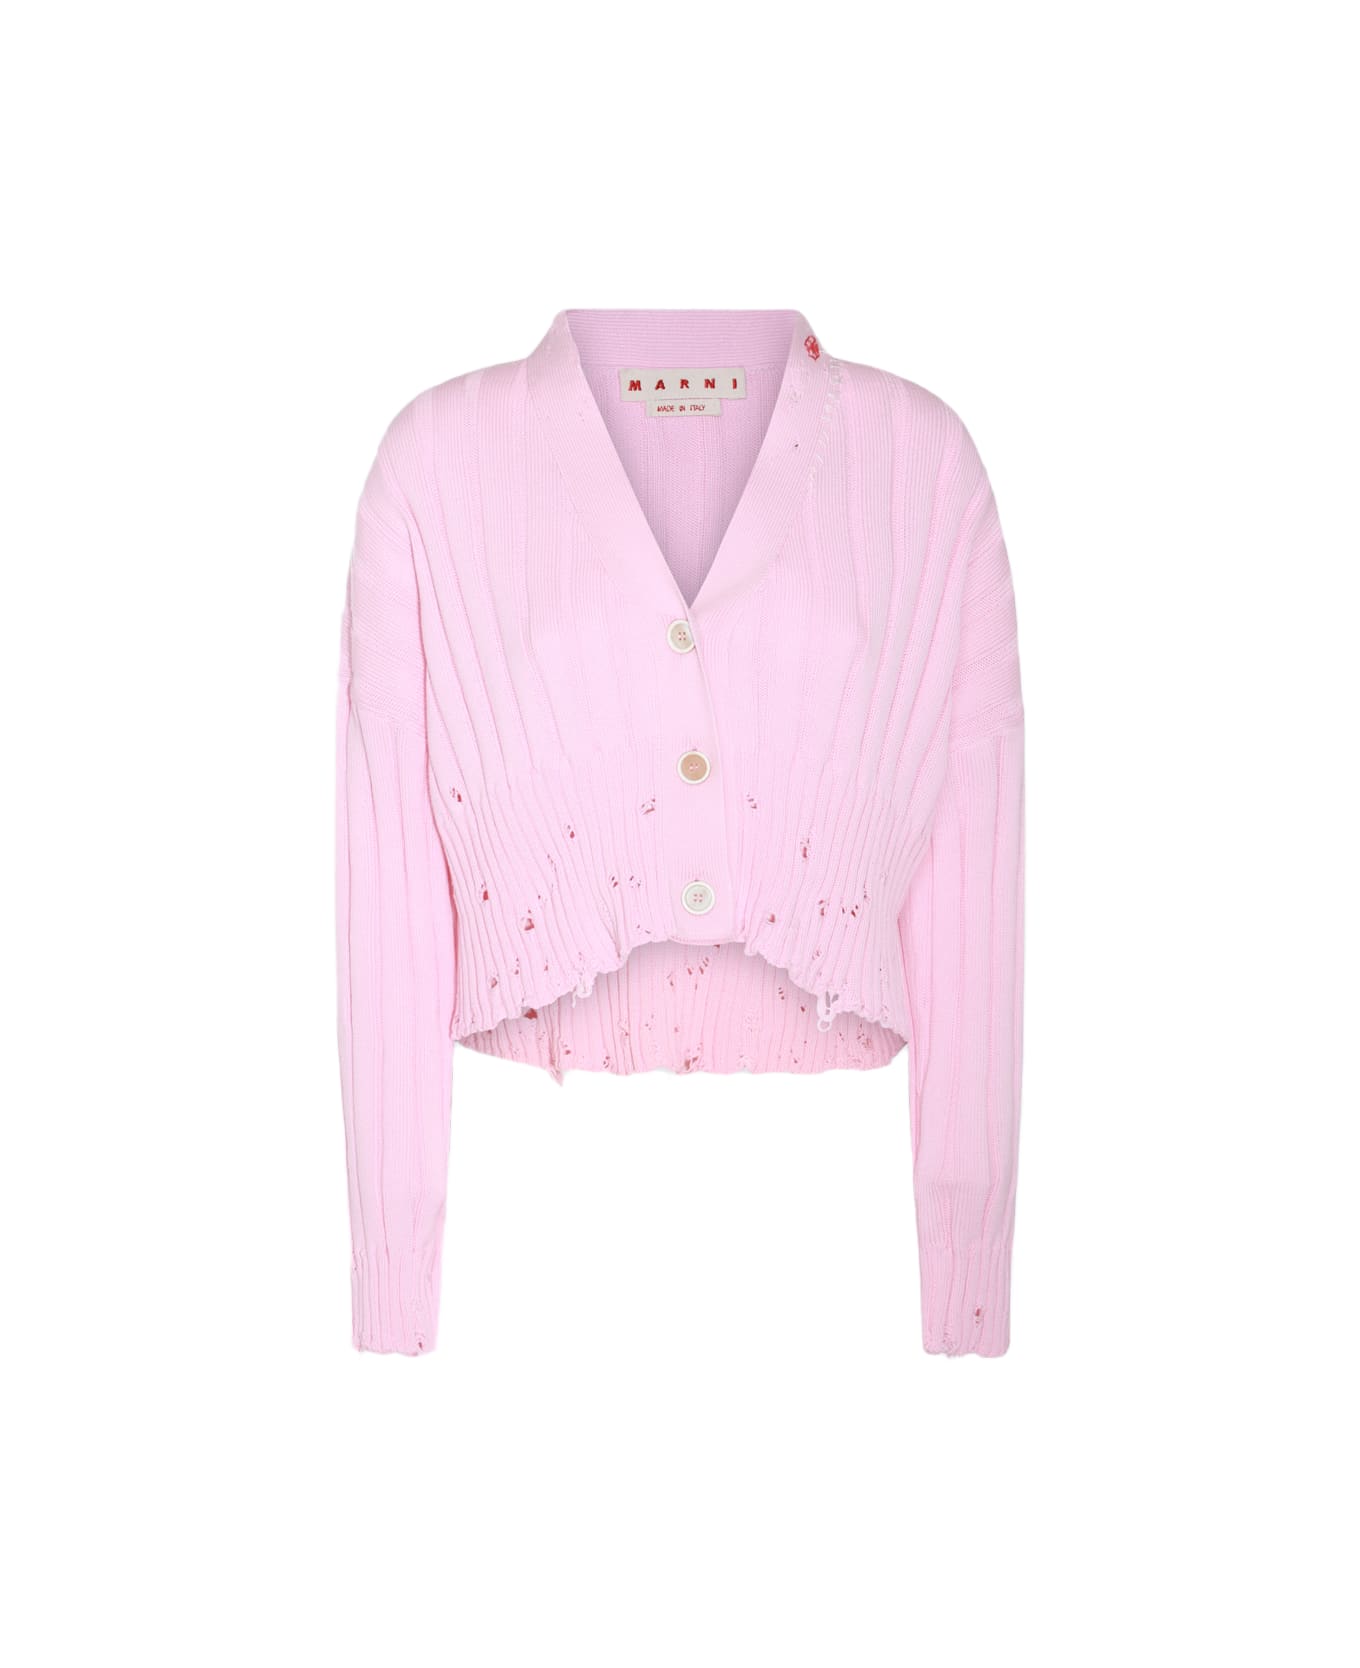 Marni Pink Cotton Knitwear - PINK GUMMY カーディガン